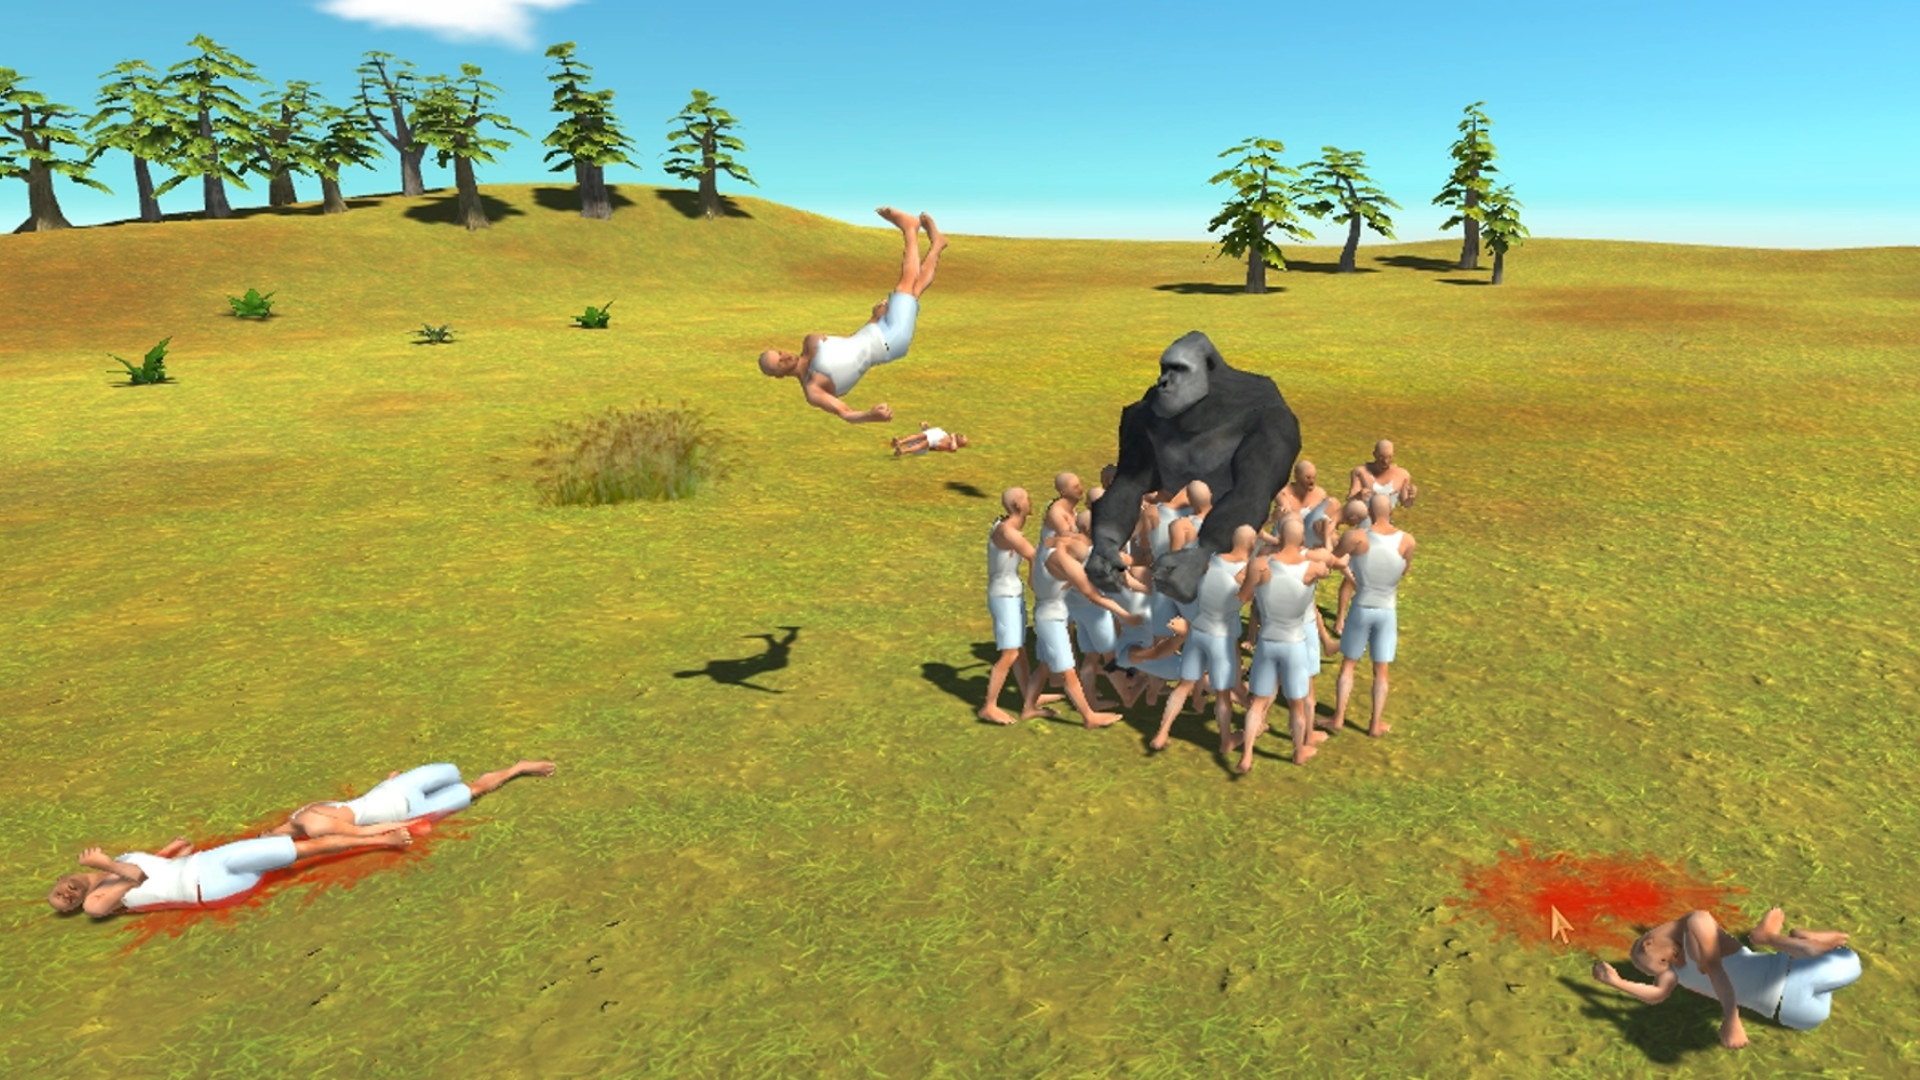 animal revolt battle simulator play free